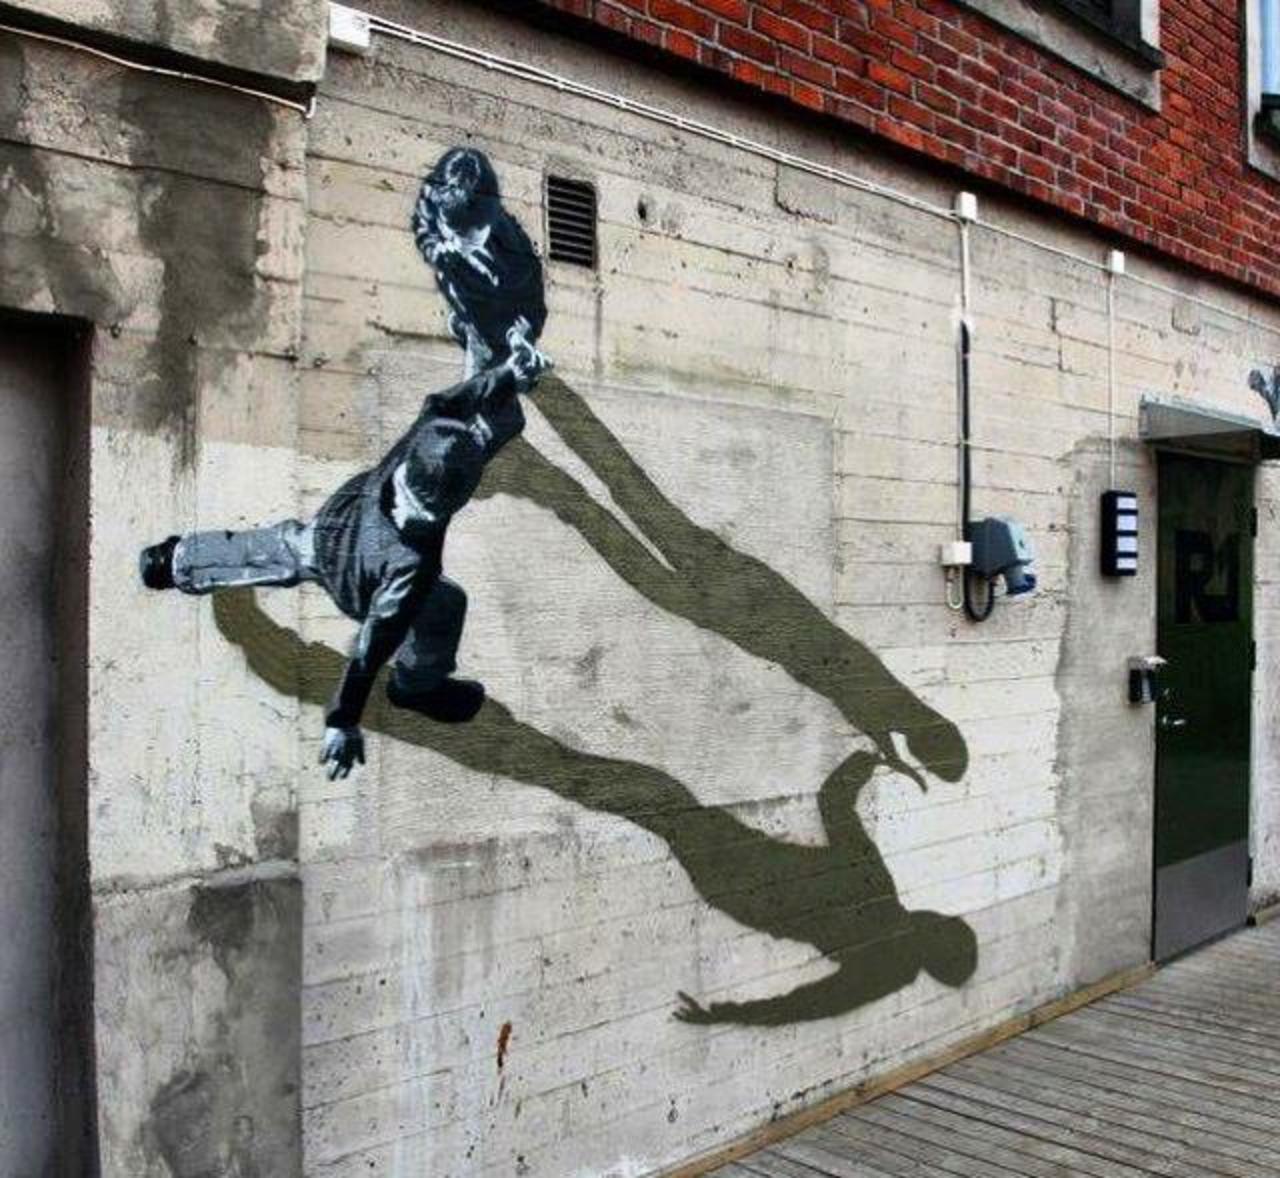 Artist Strok's wall walkers photorealistic Street Art in Porsgrunn, Norway

#art #arte #graffiti #streetart http://t.co/uBaD1v7r68